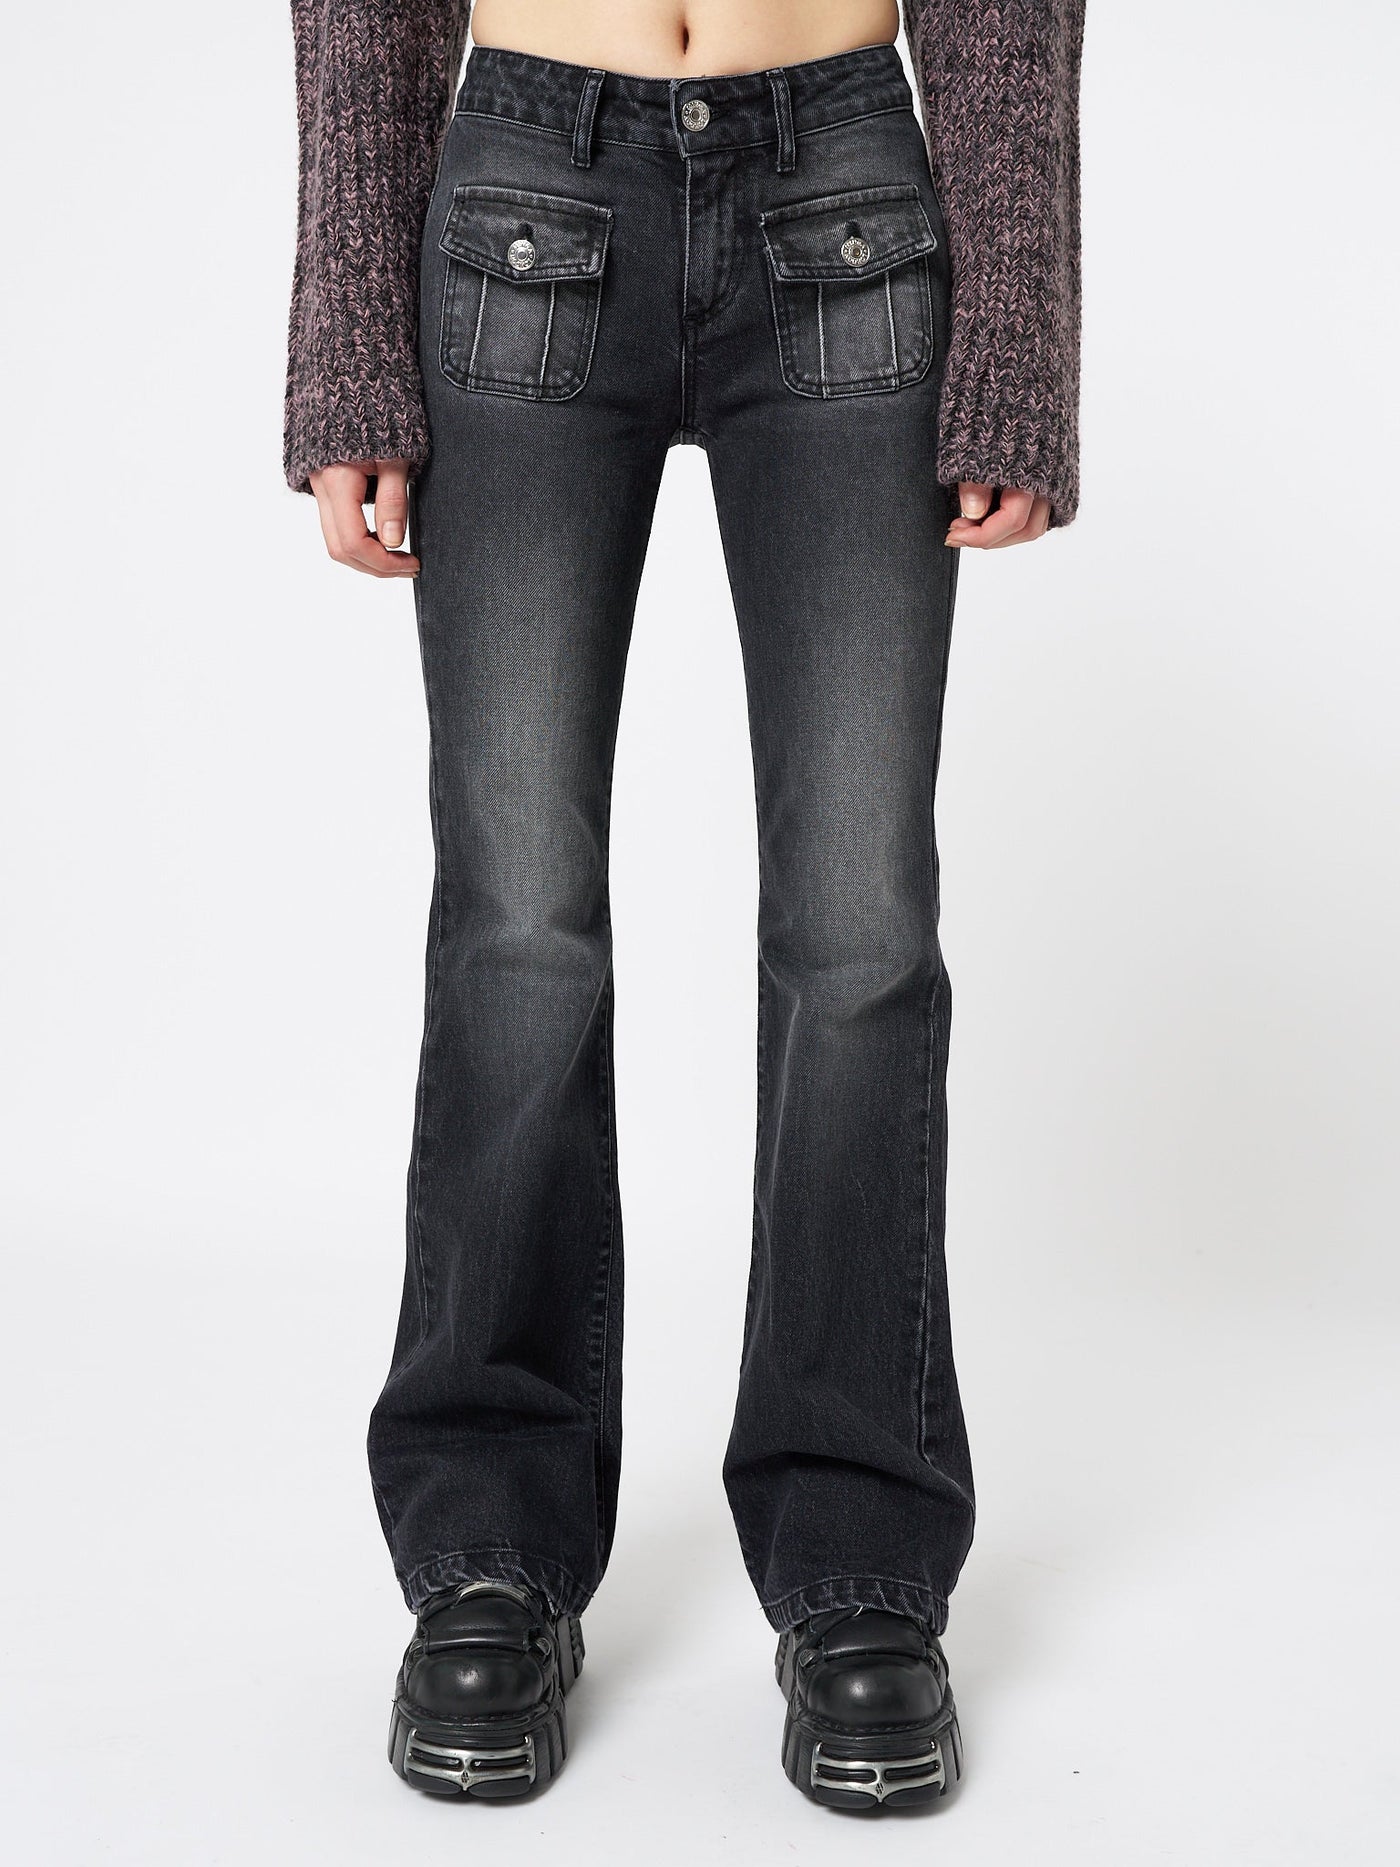 Jade Black Front Pocket Flare Jeans - Minga  US